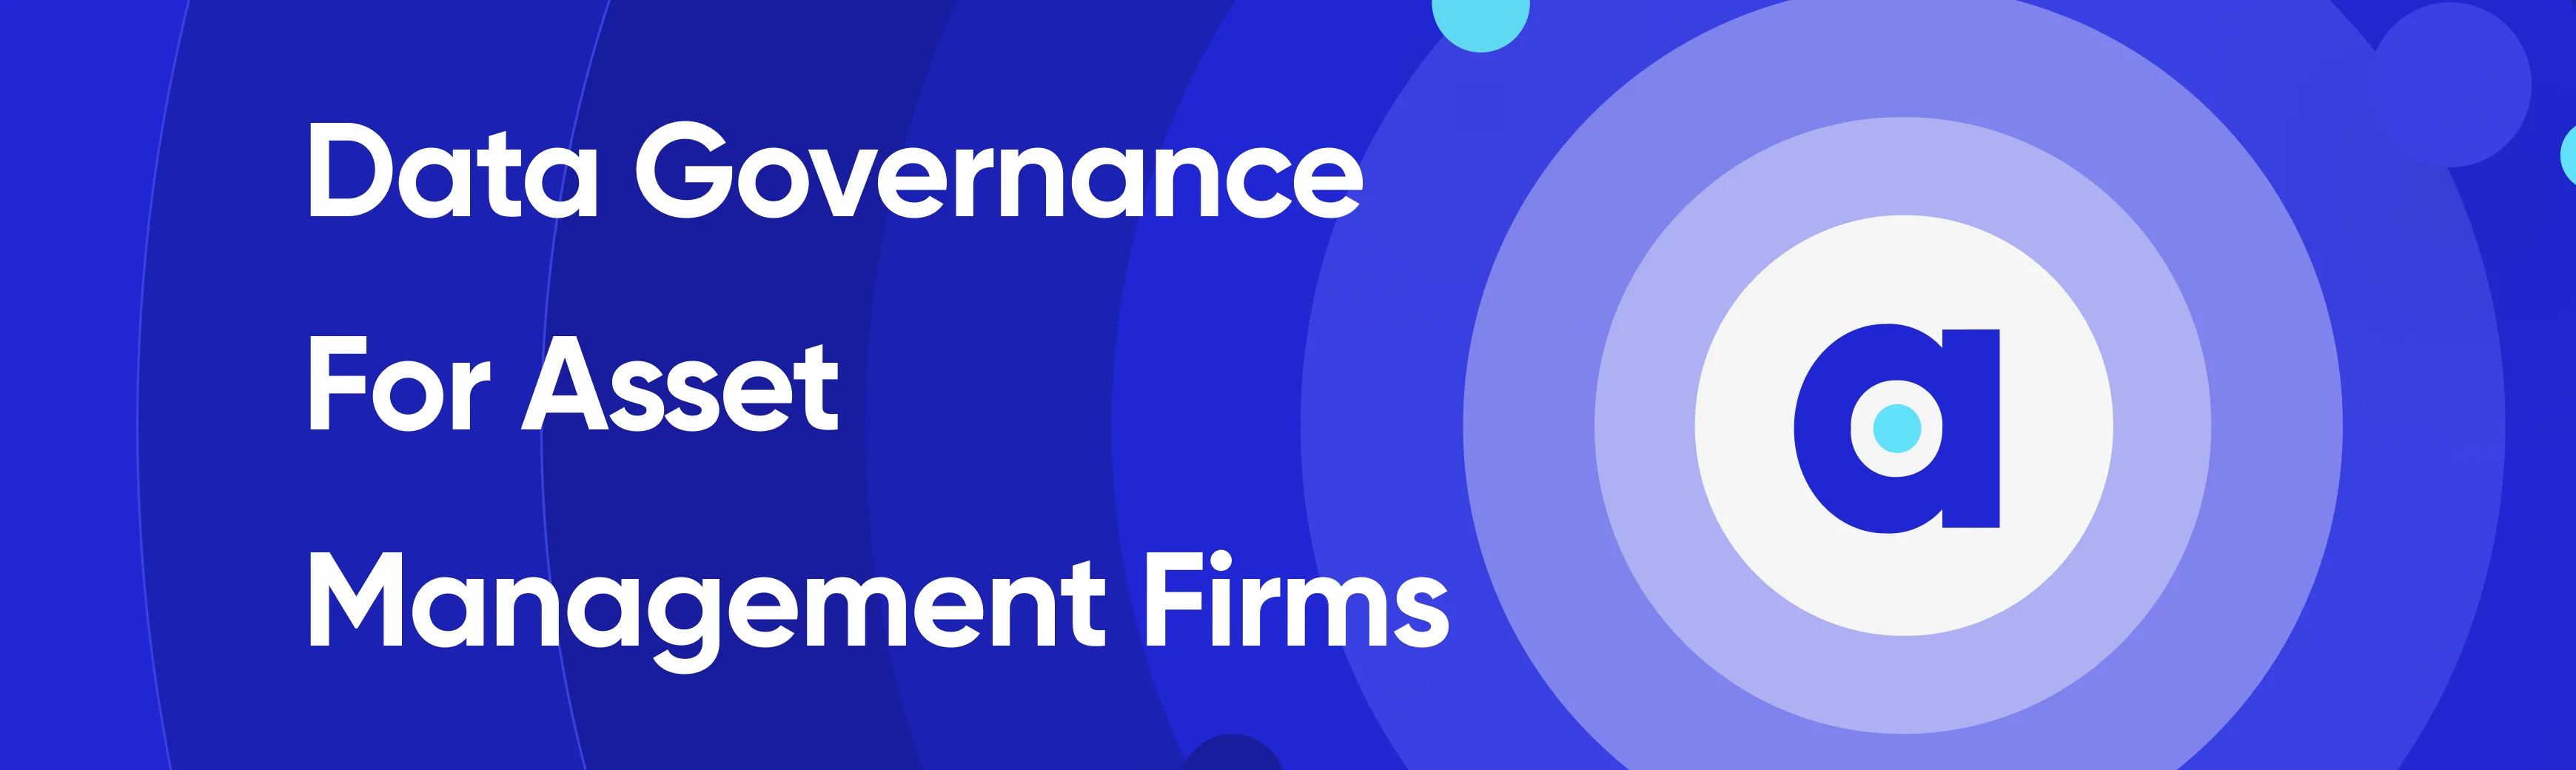 Data governance for asset management firms